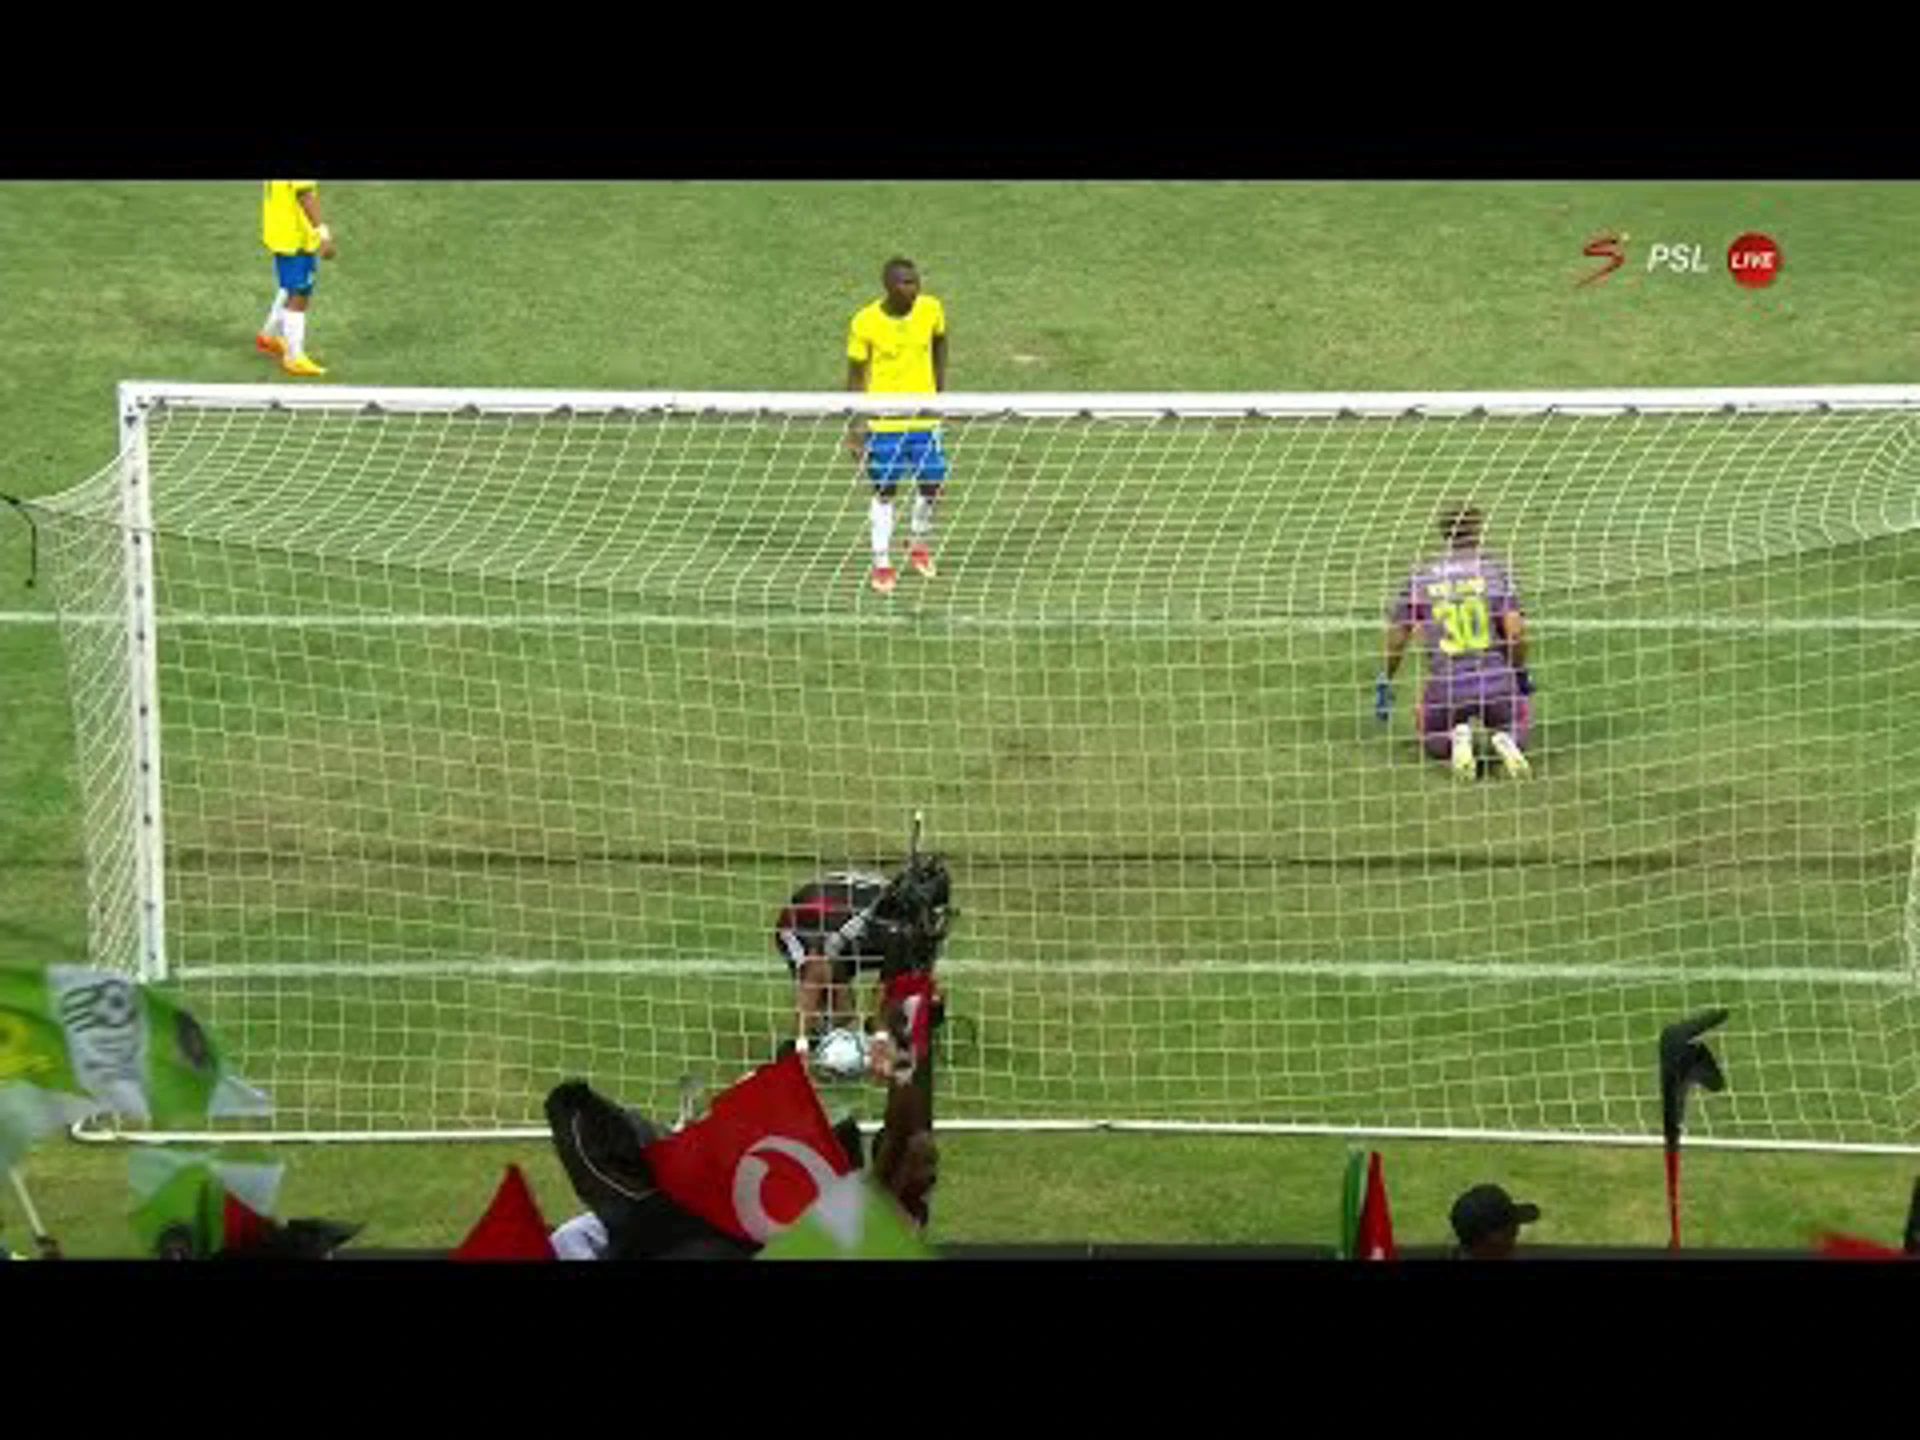 Relebohile Ratomo | 94ᵗʰ Minute Spectacular Skill with Ball v Mamelodi Sundowns